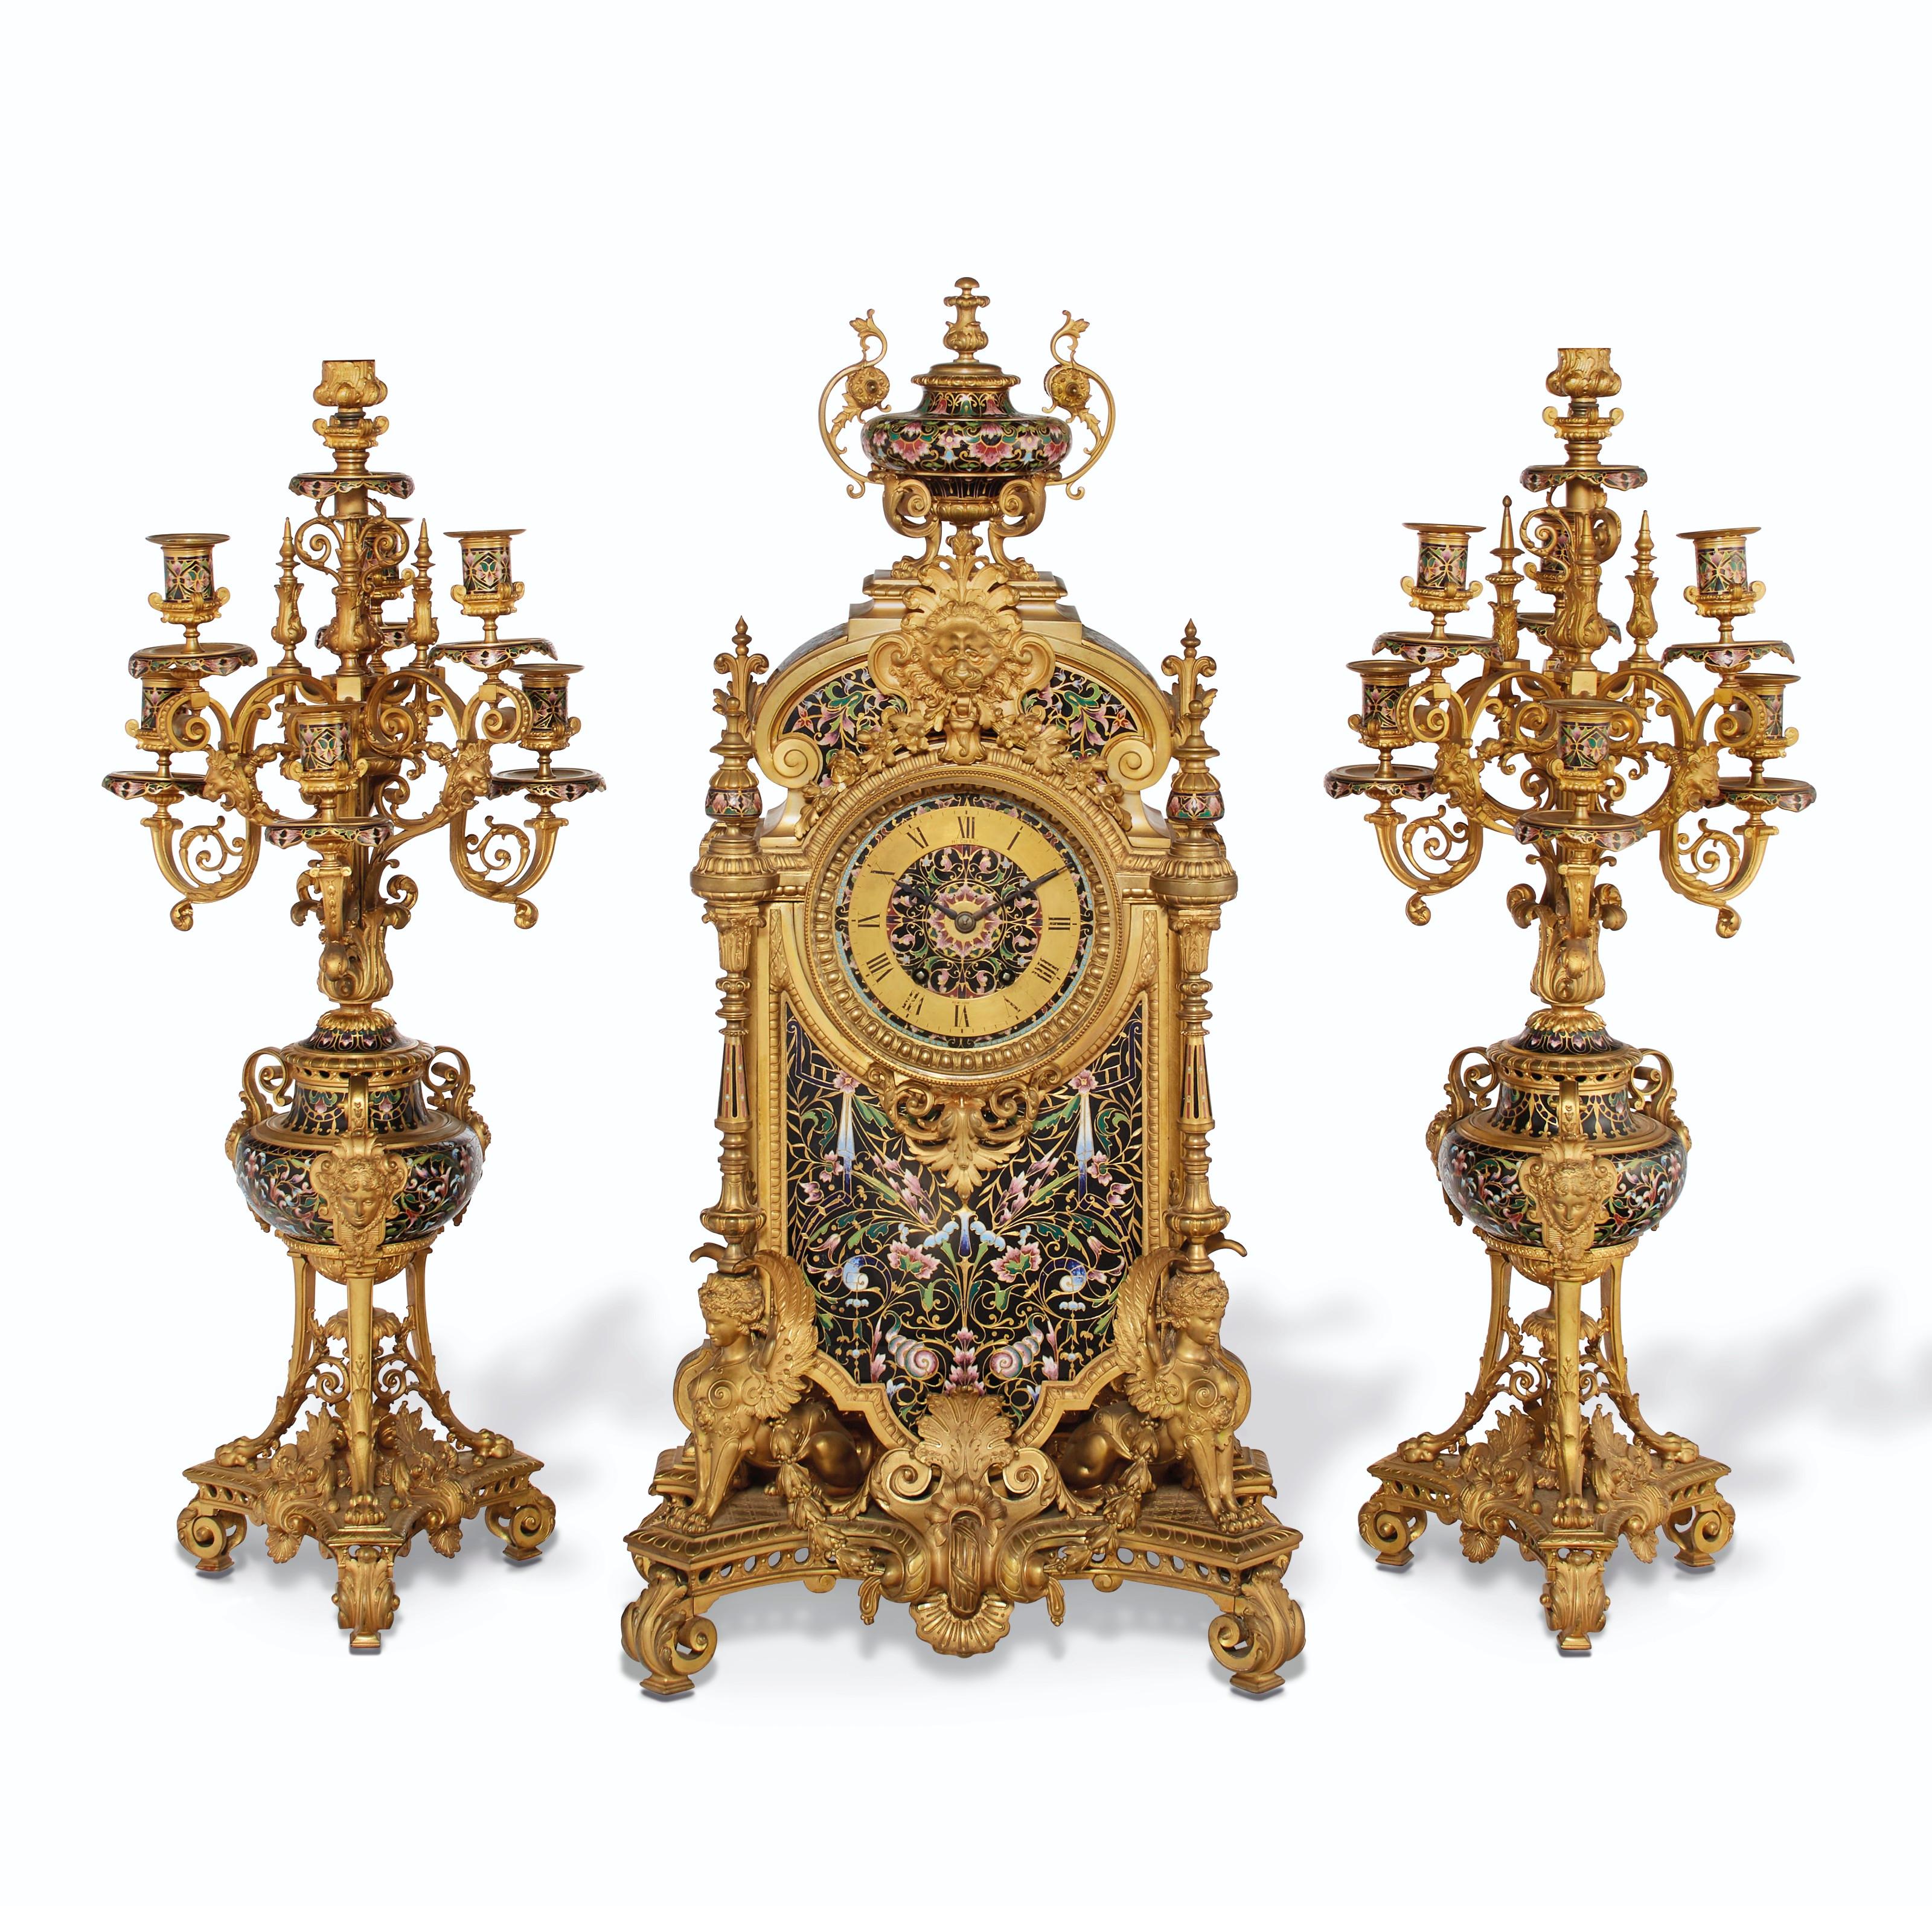 19th Century  Monumental French Ormolu and Champlevé Enamel Three-Piece Clock Garniture